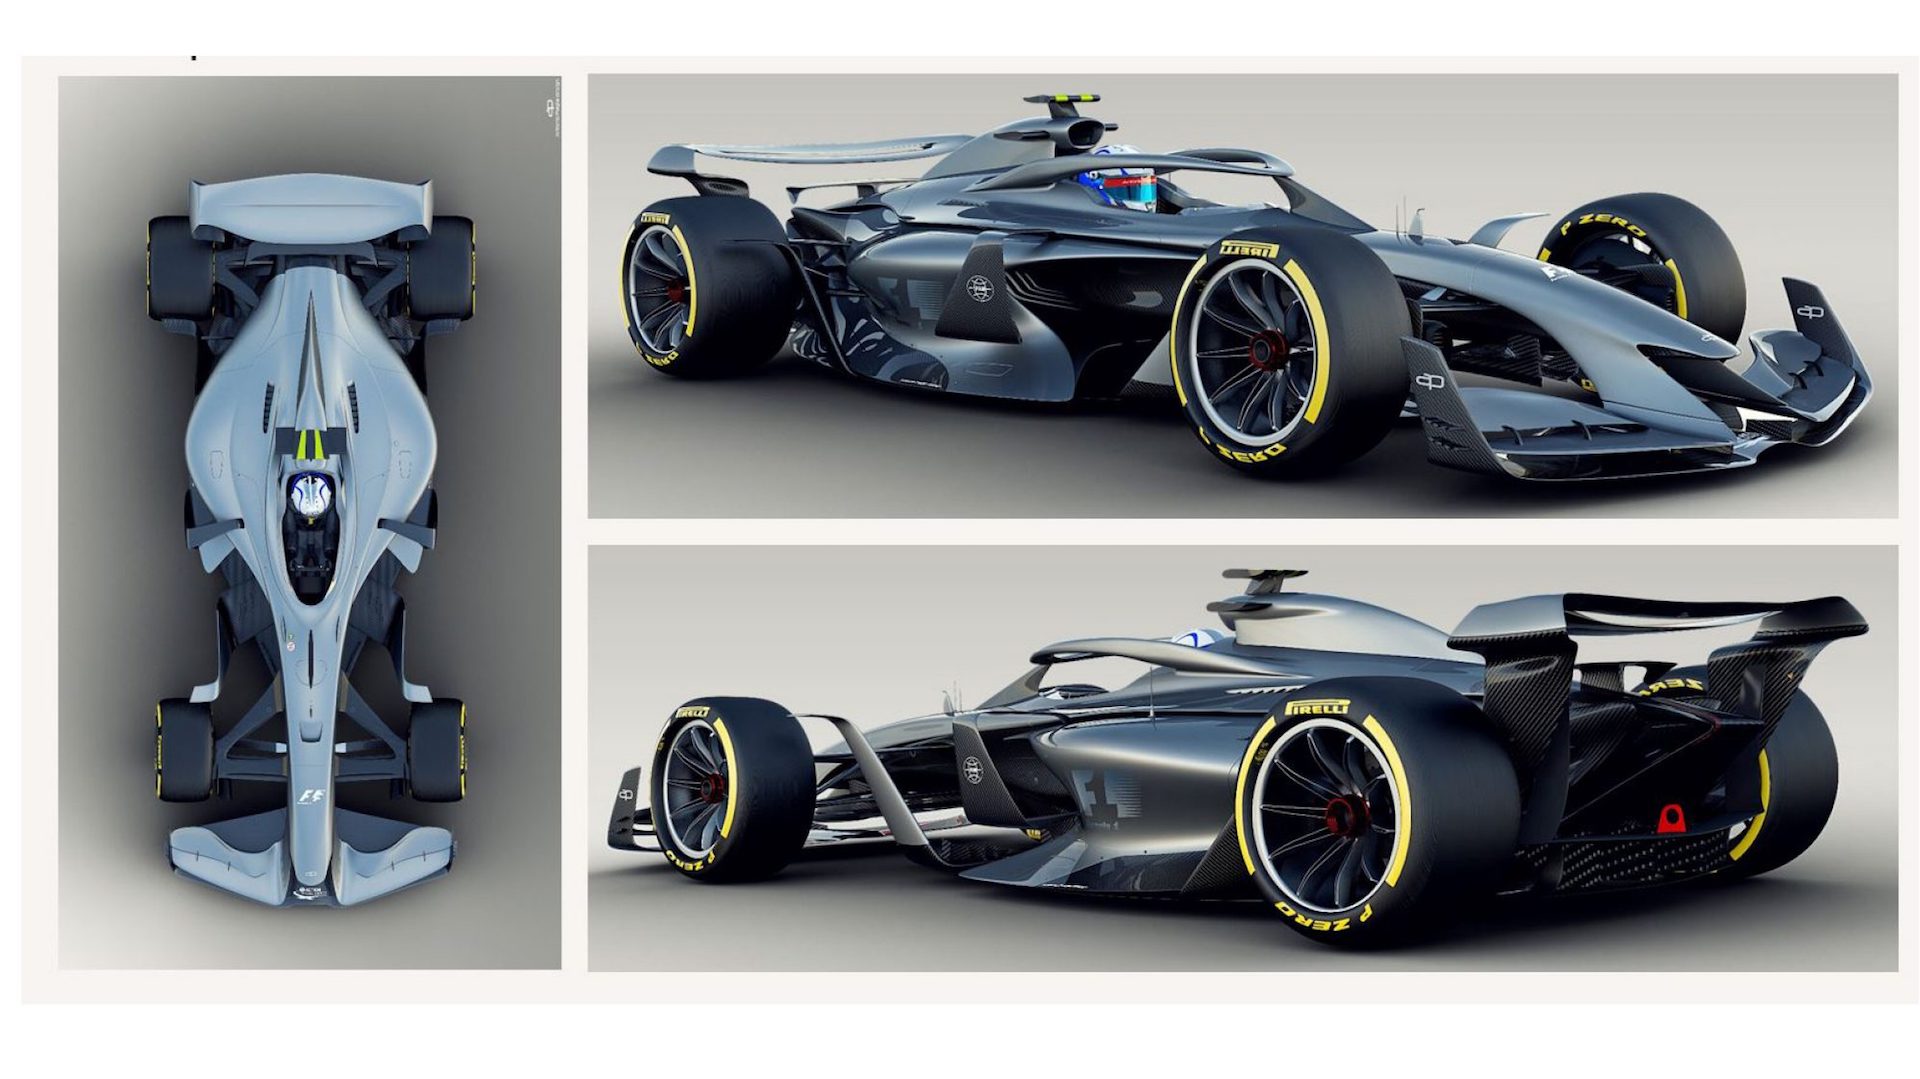 2021 F1 car design proposals focus on aerodynamics for better racing